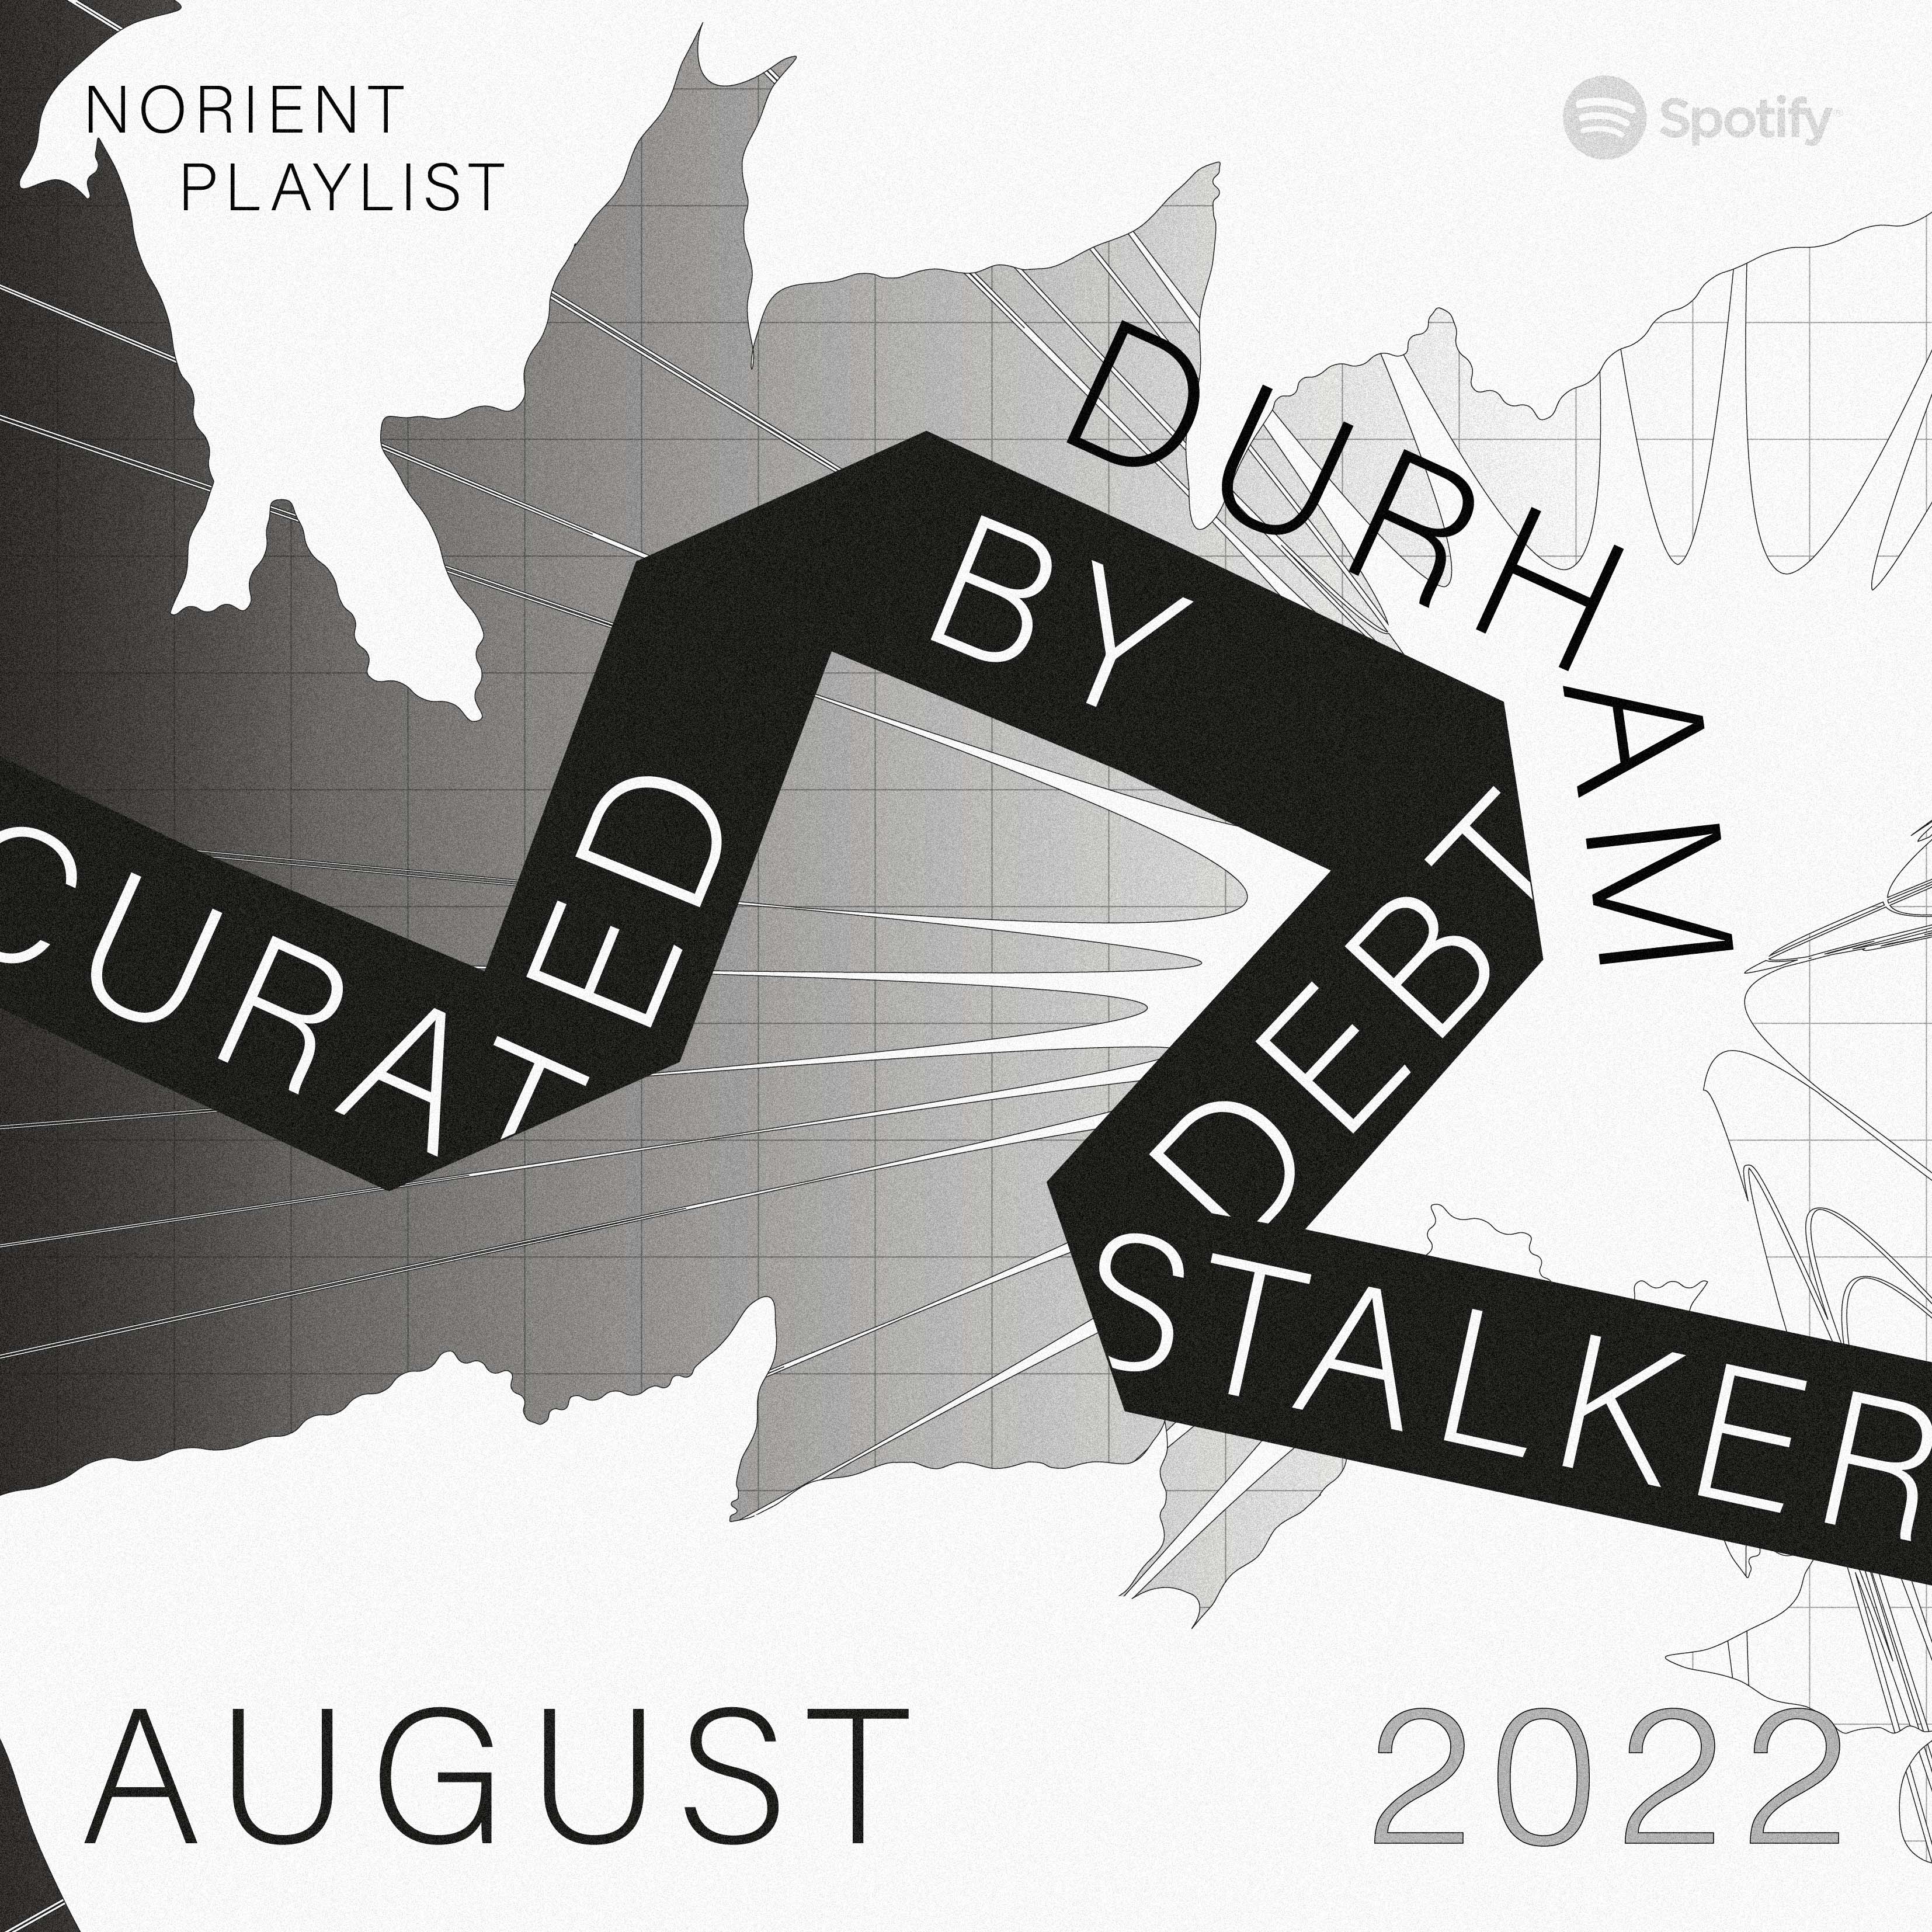 stalker_august-playlist_maria-uthe.jpg 